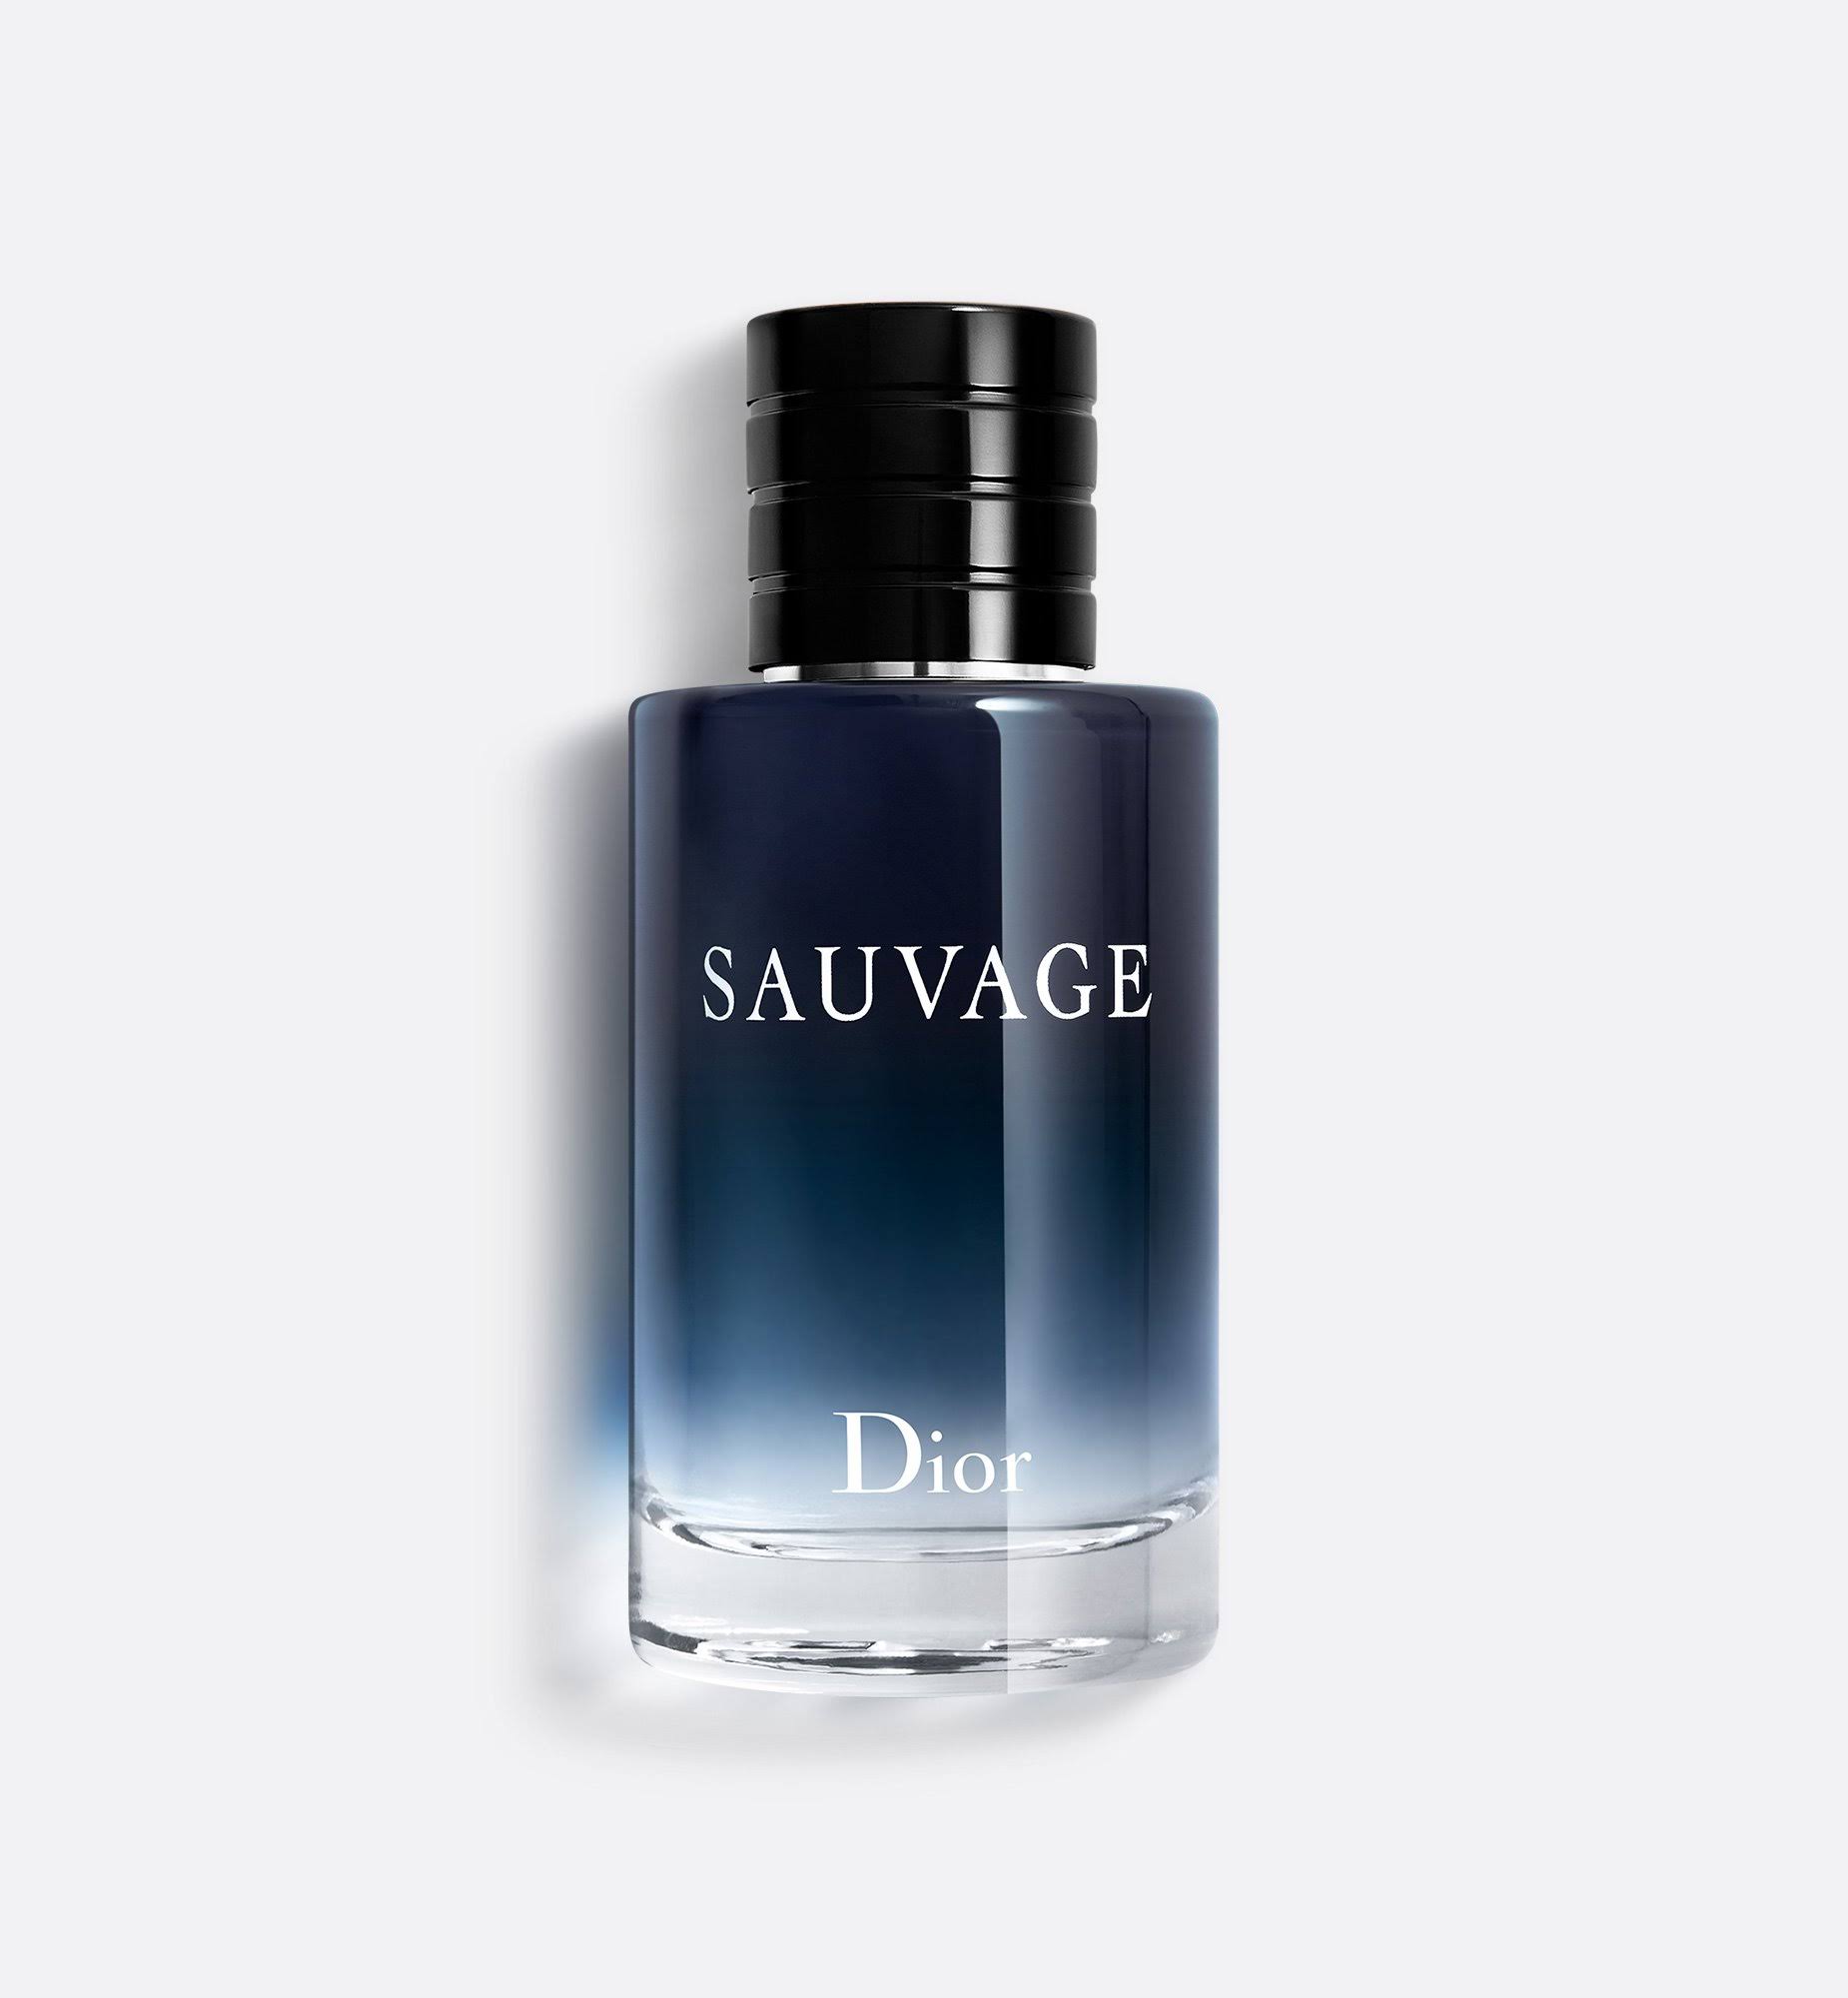 Dior Sauvage Eau de Toilette Spray - 100ml